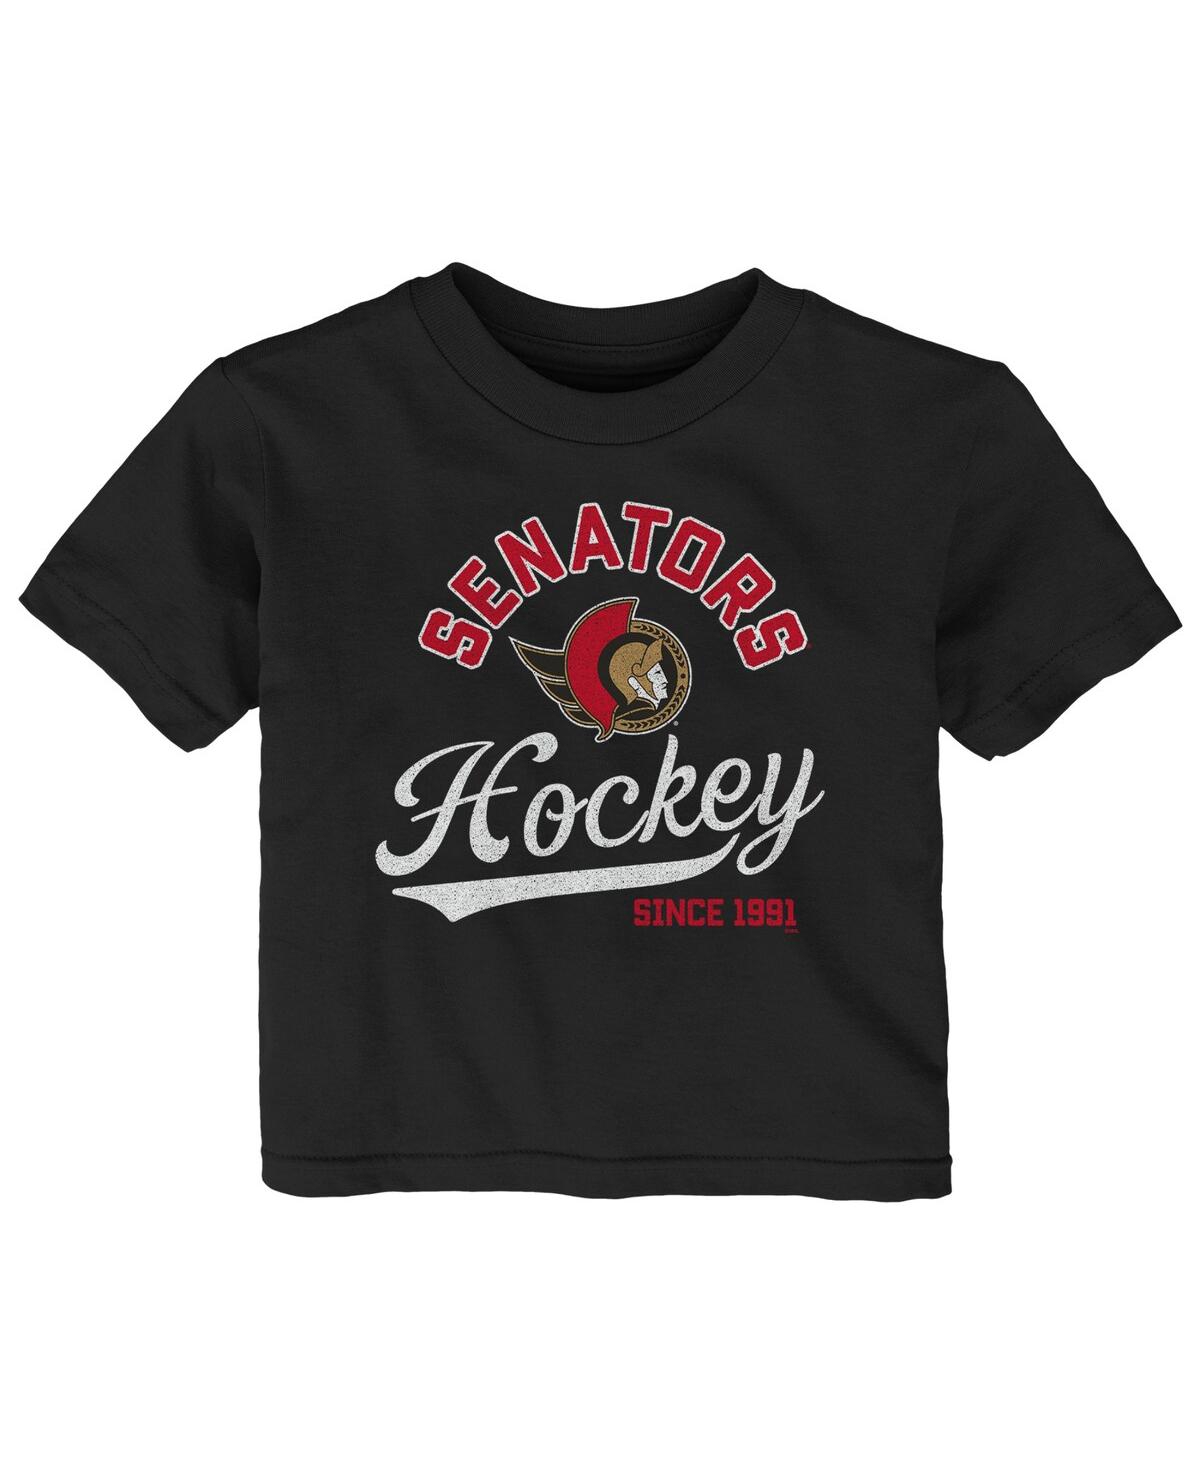 Outerstuff Babies' Infant Boys And Girls Black Distressed Ottawa Senators Take The Lead T-shirt